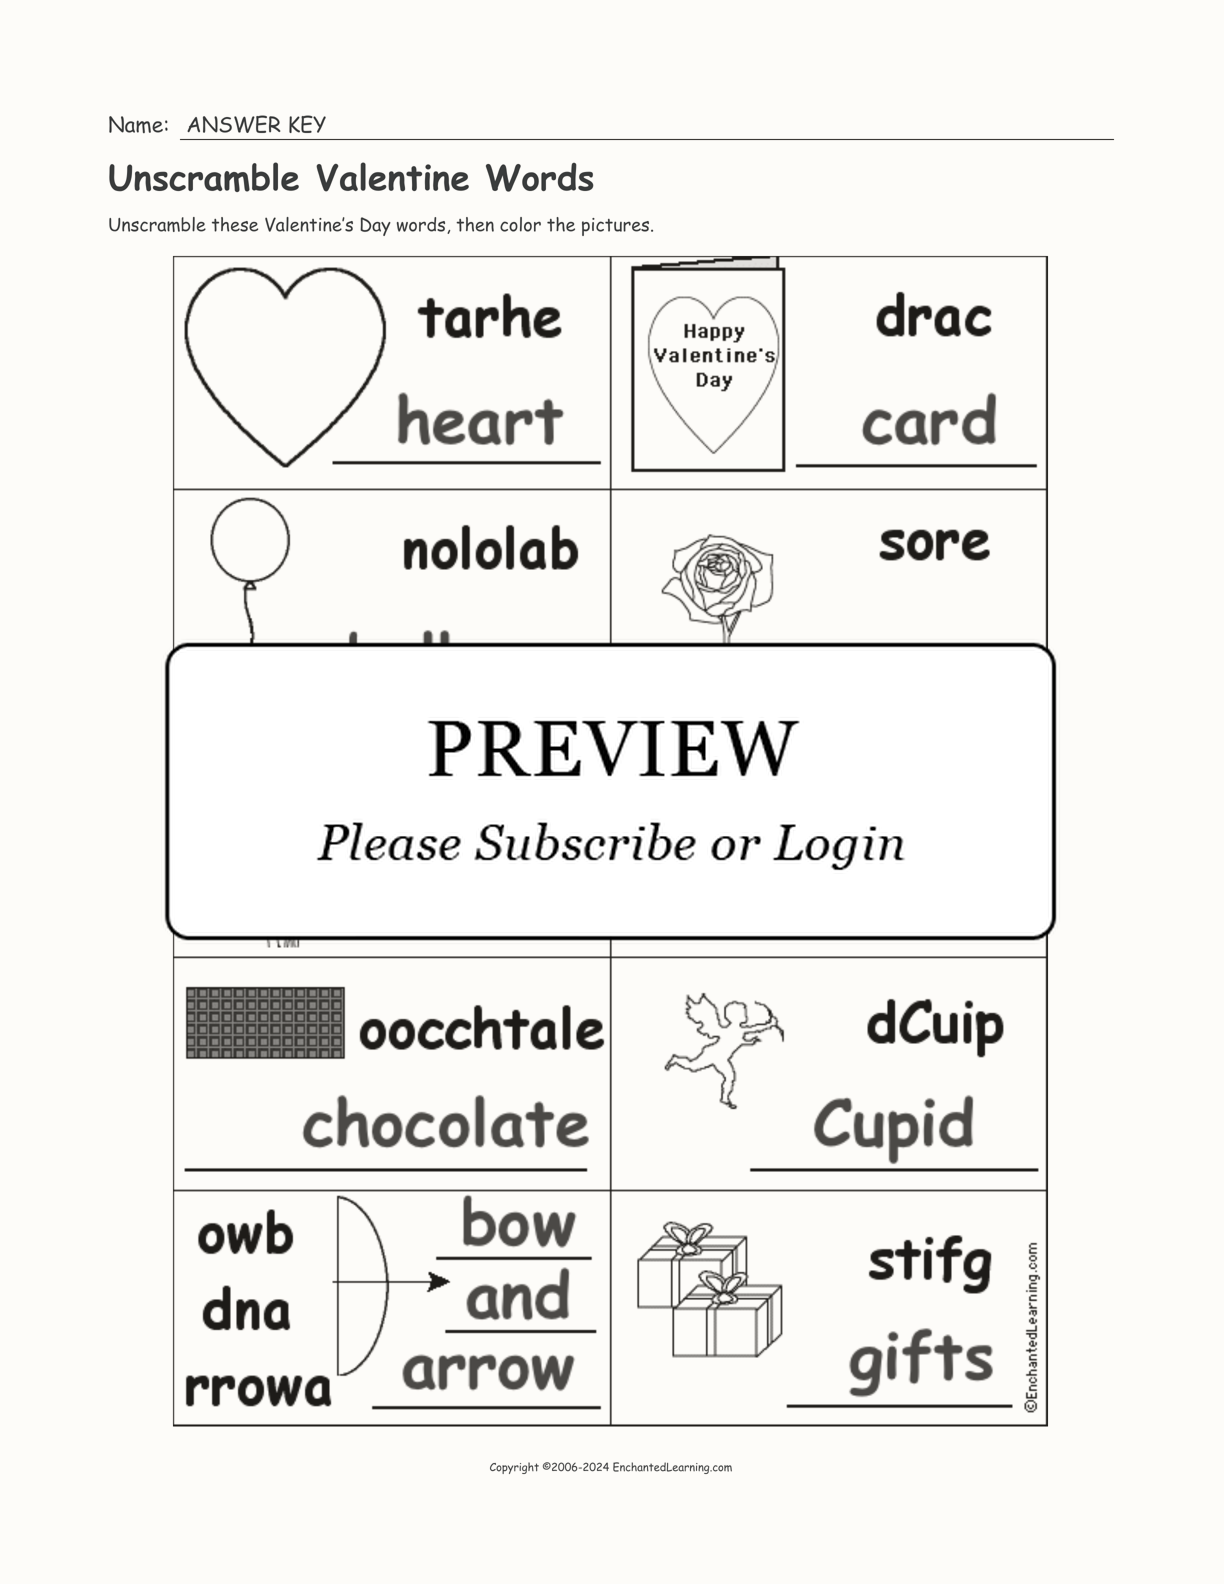 Unscramble Valentine Words interactive worksheet page 2